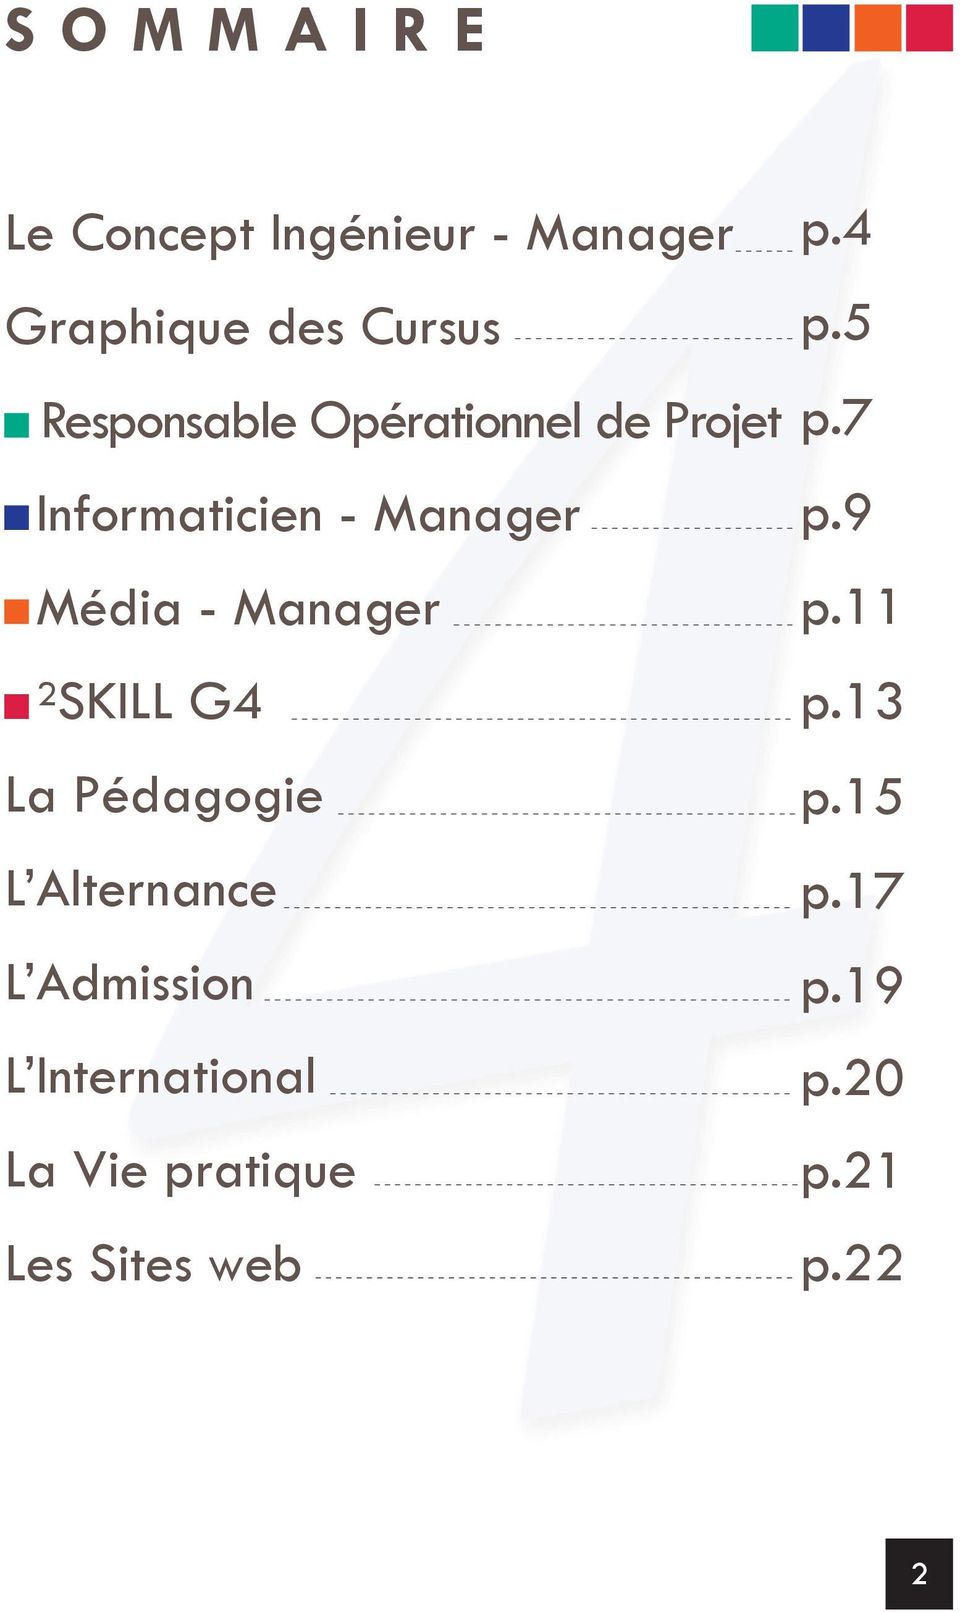 Manager ²SKILL G4 La Pédagogie L Alternance L Admission L International